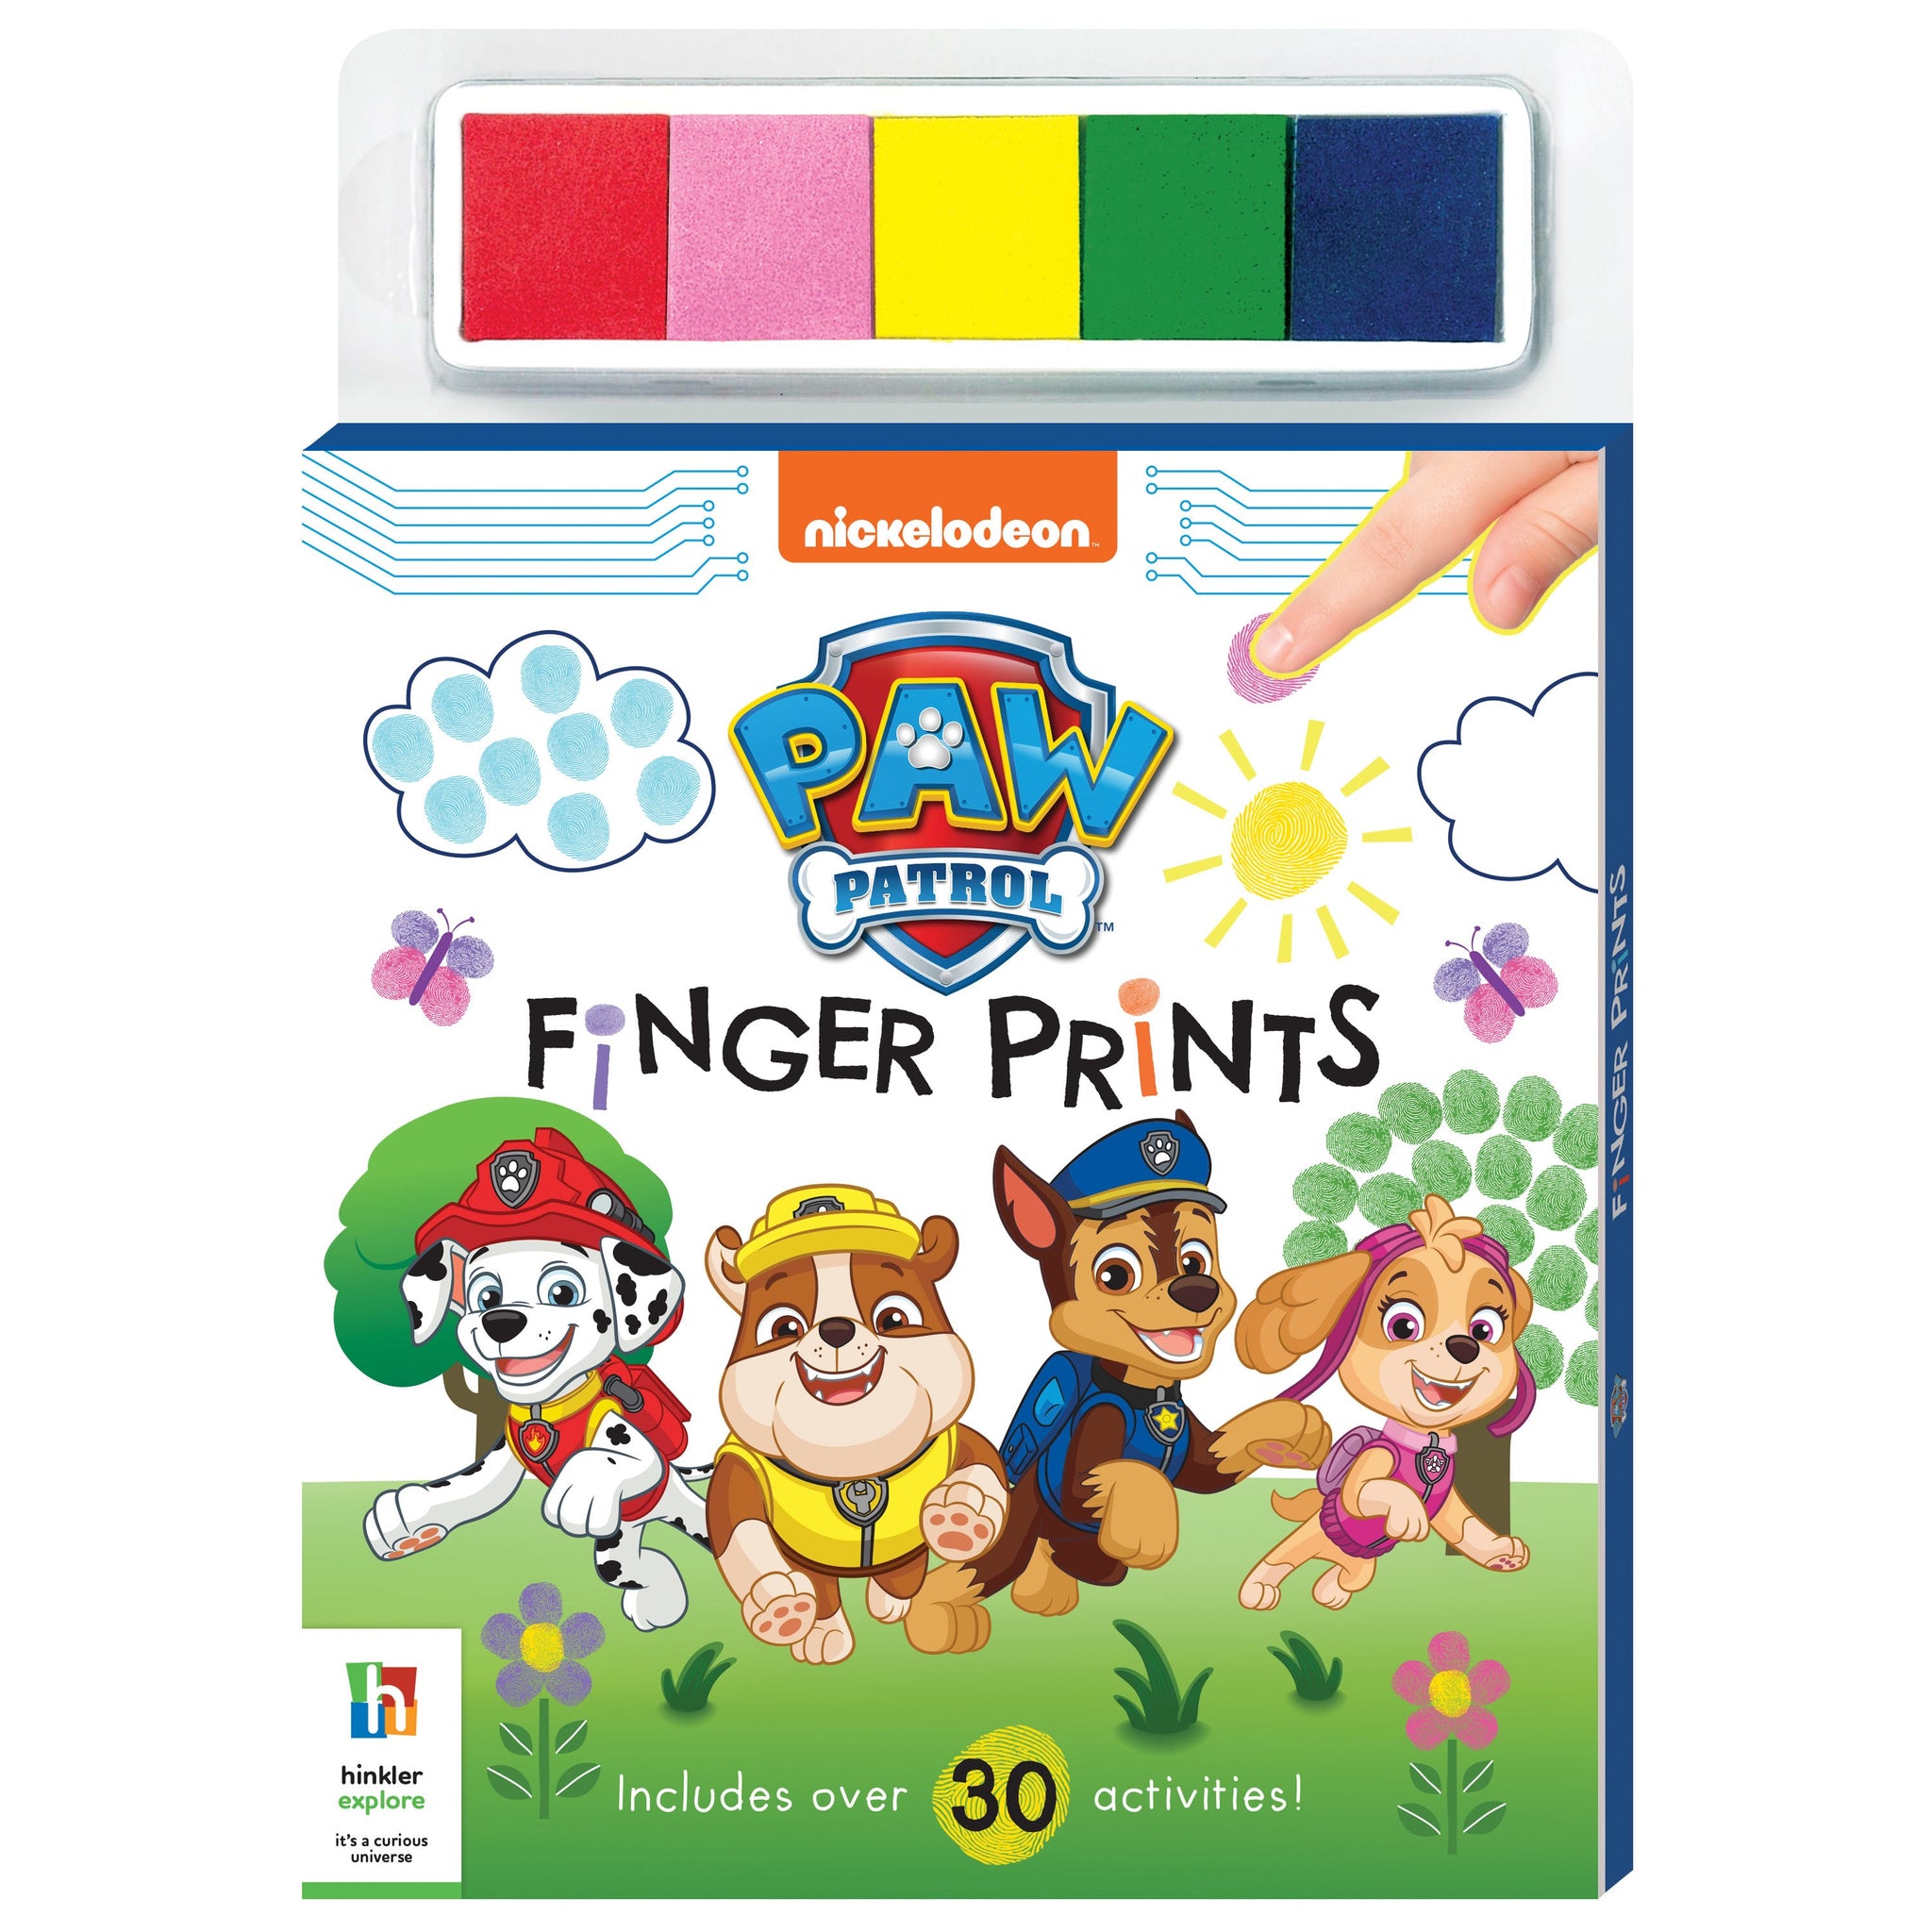 Finger Prints: Paw Patrol